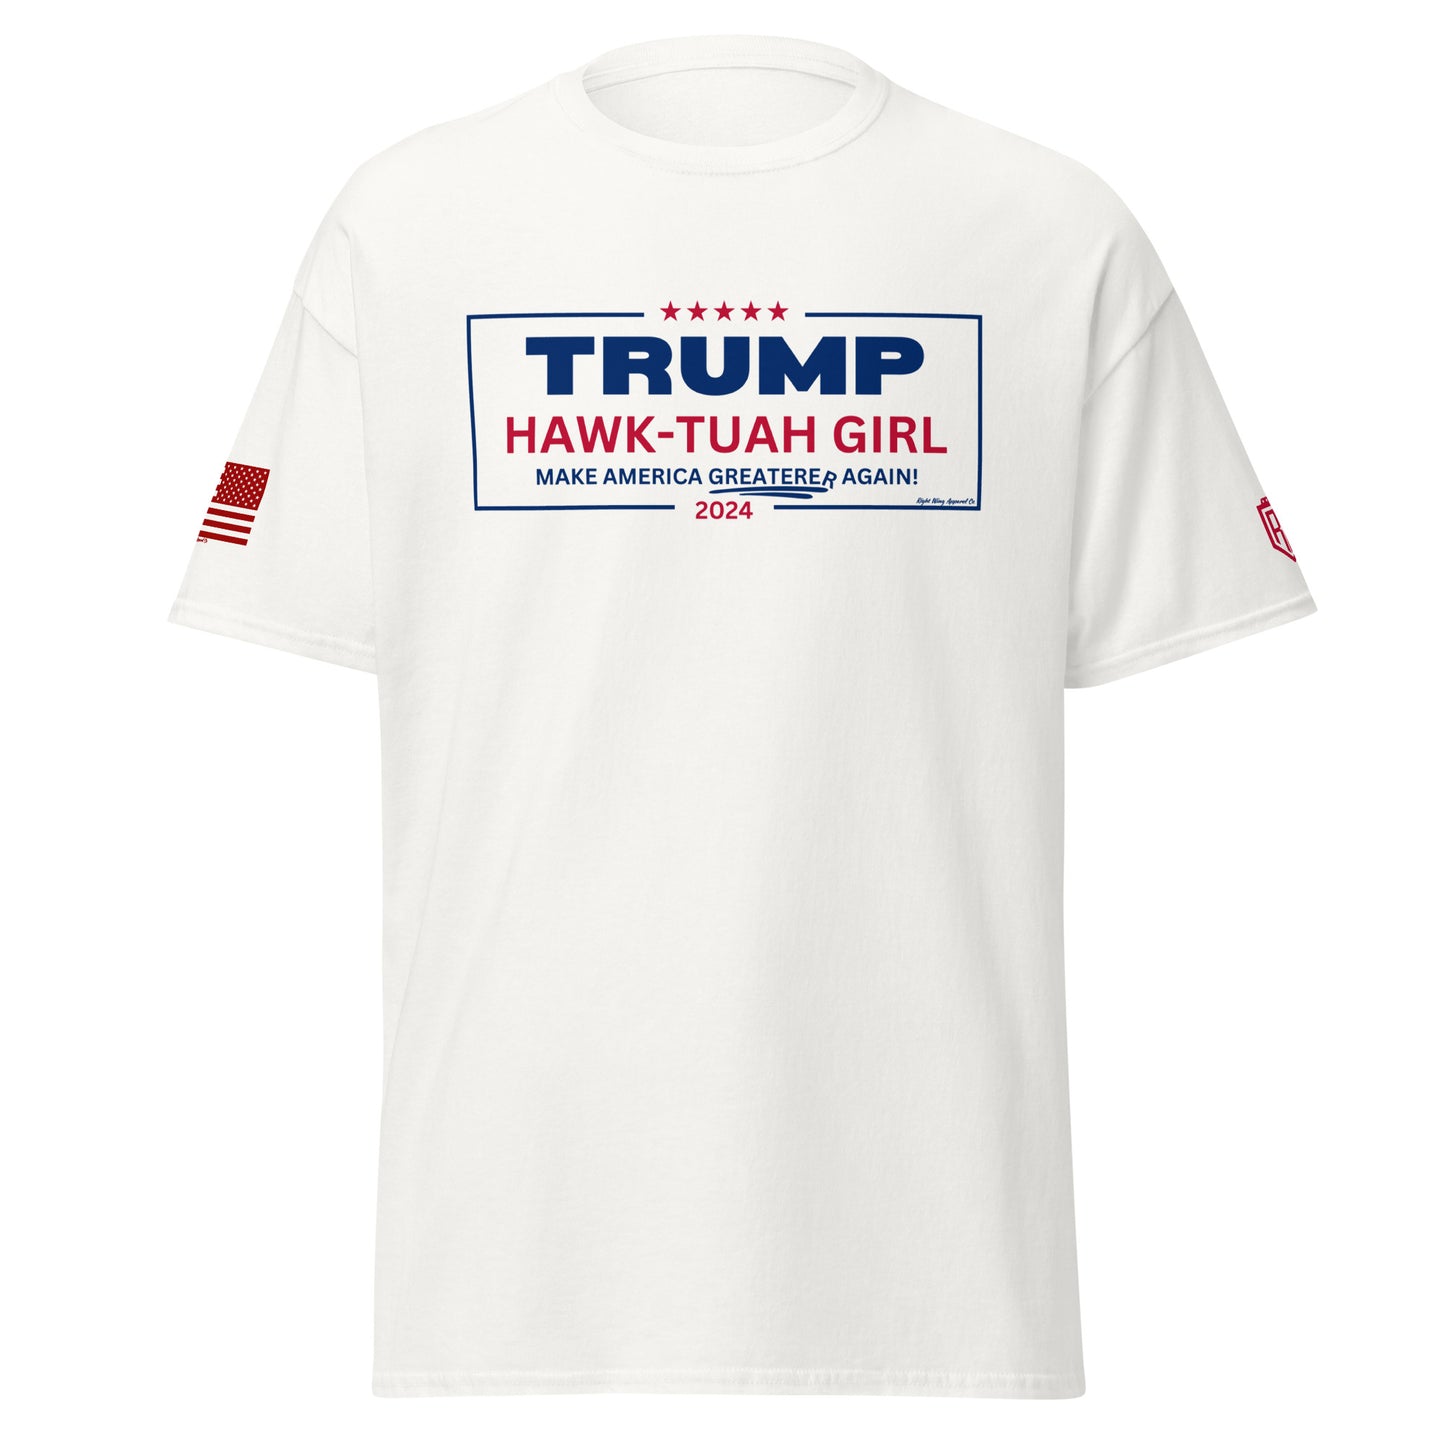 Trump Hawk-Tuah Girl "Make America Greaterer Again!" Campaign T-Shirt